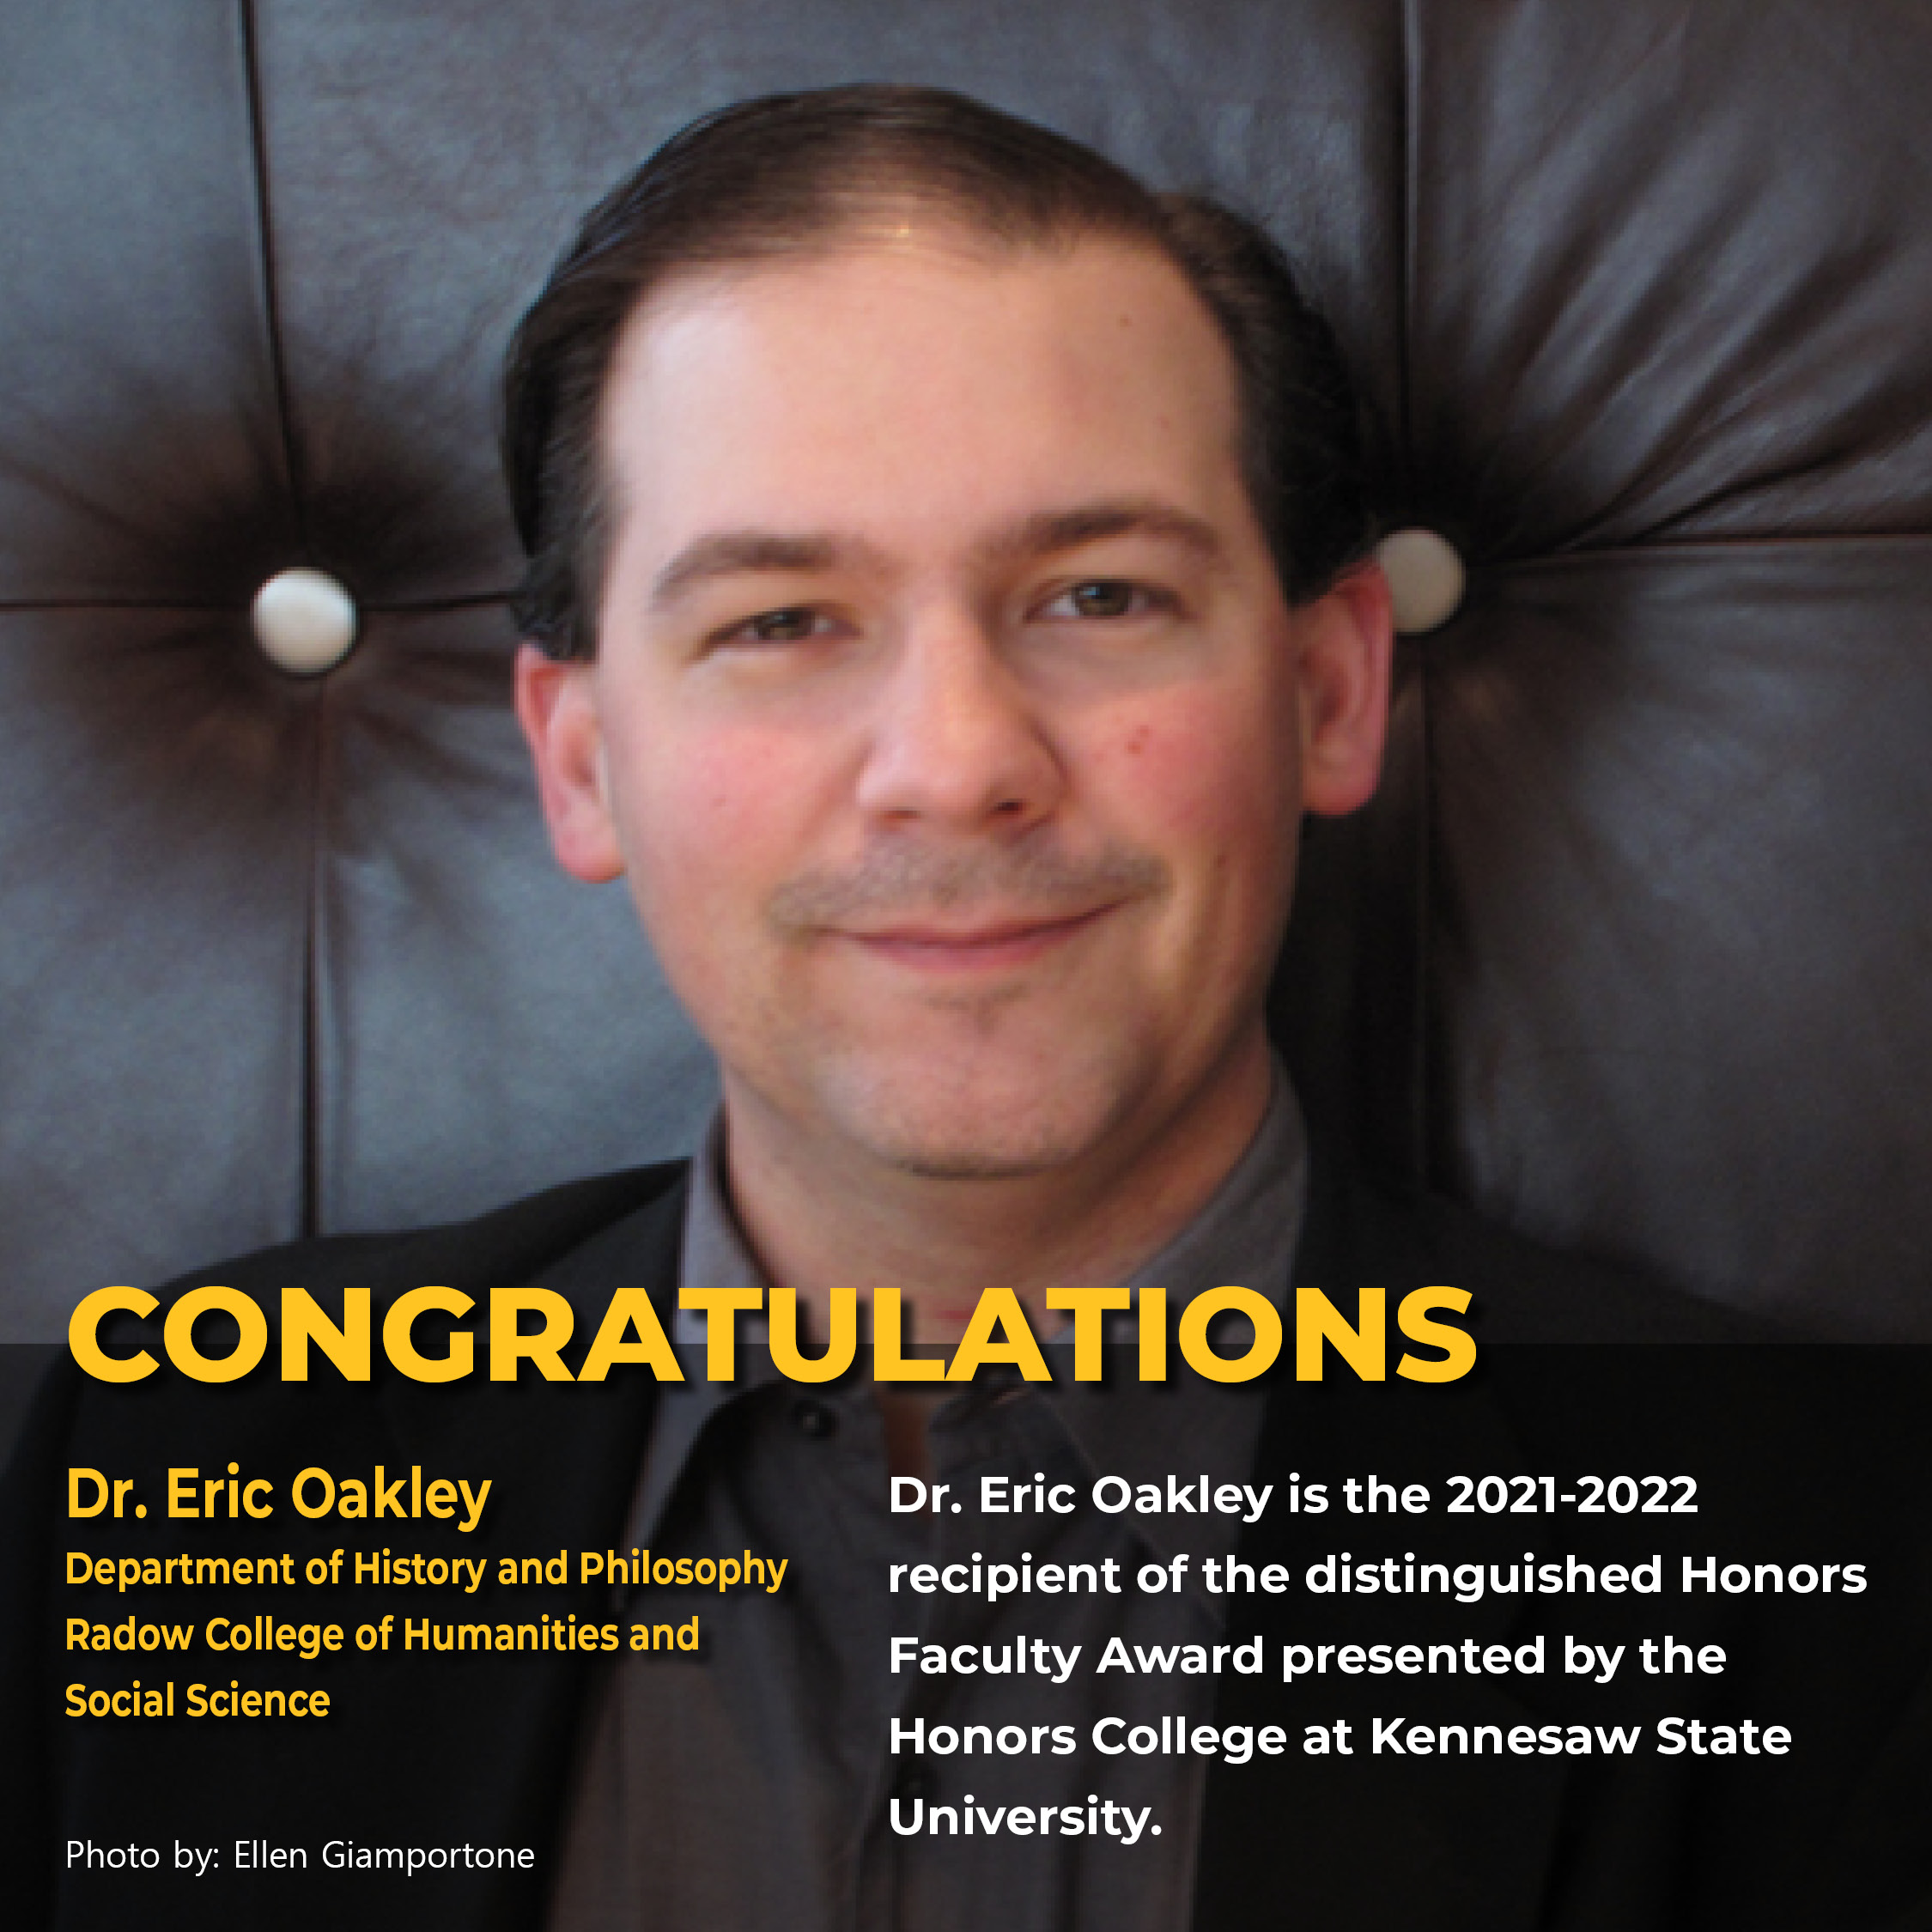 Dr. Eric Oakley